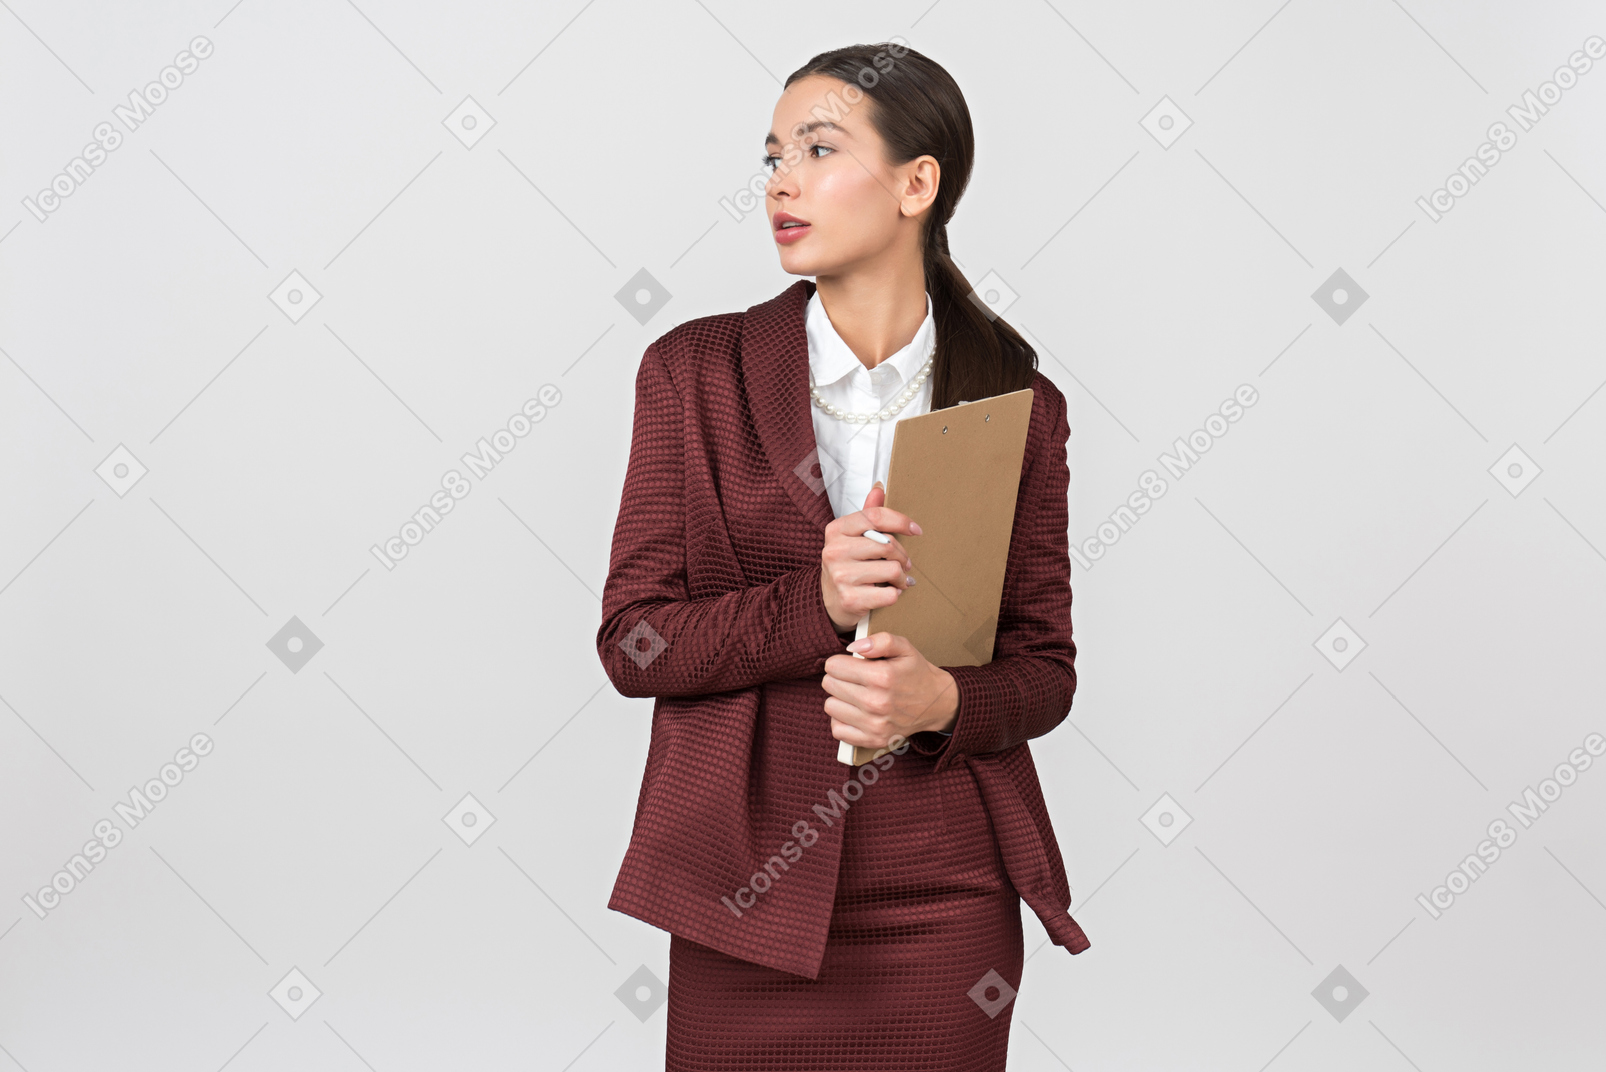 Atractiva mujer vestida formalmente sosteniendo un portapapeles